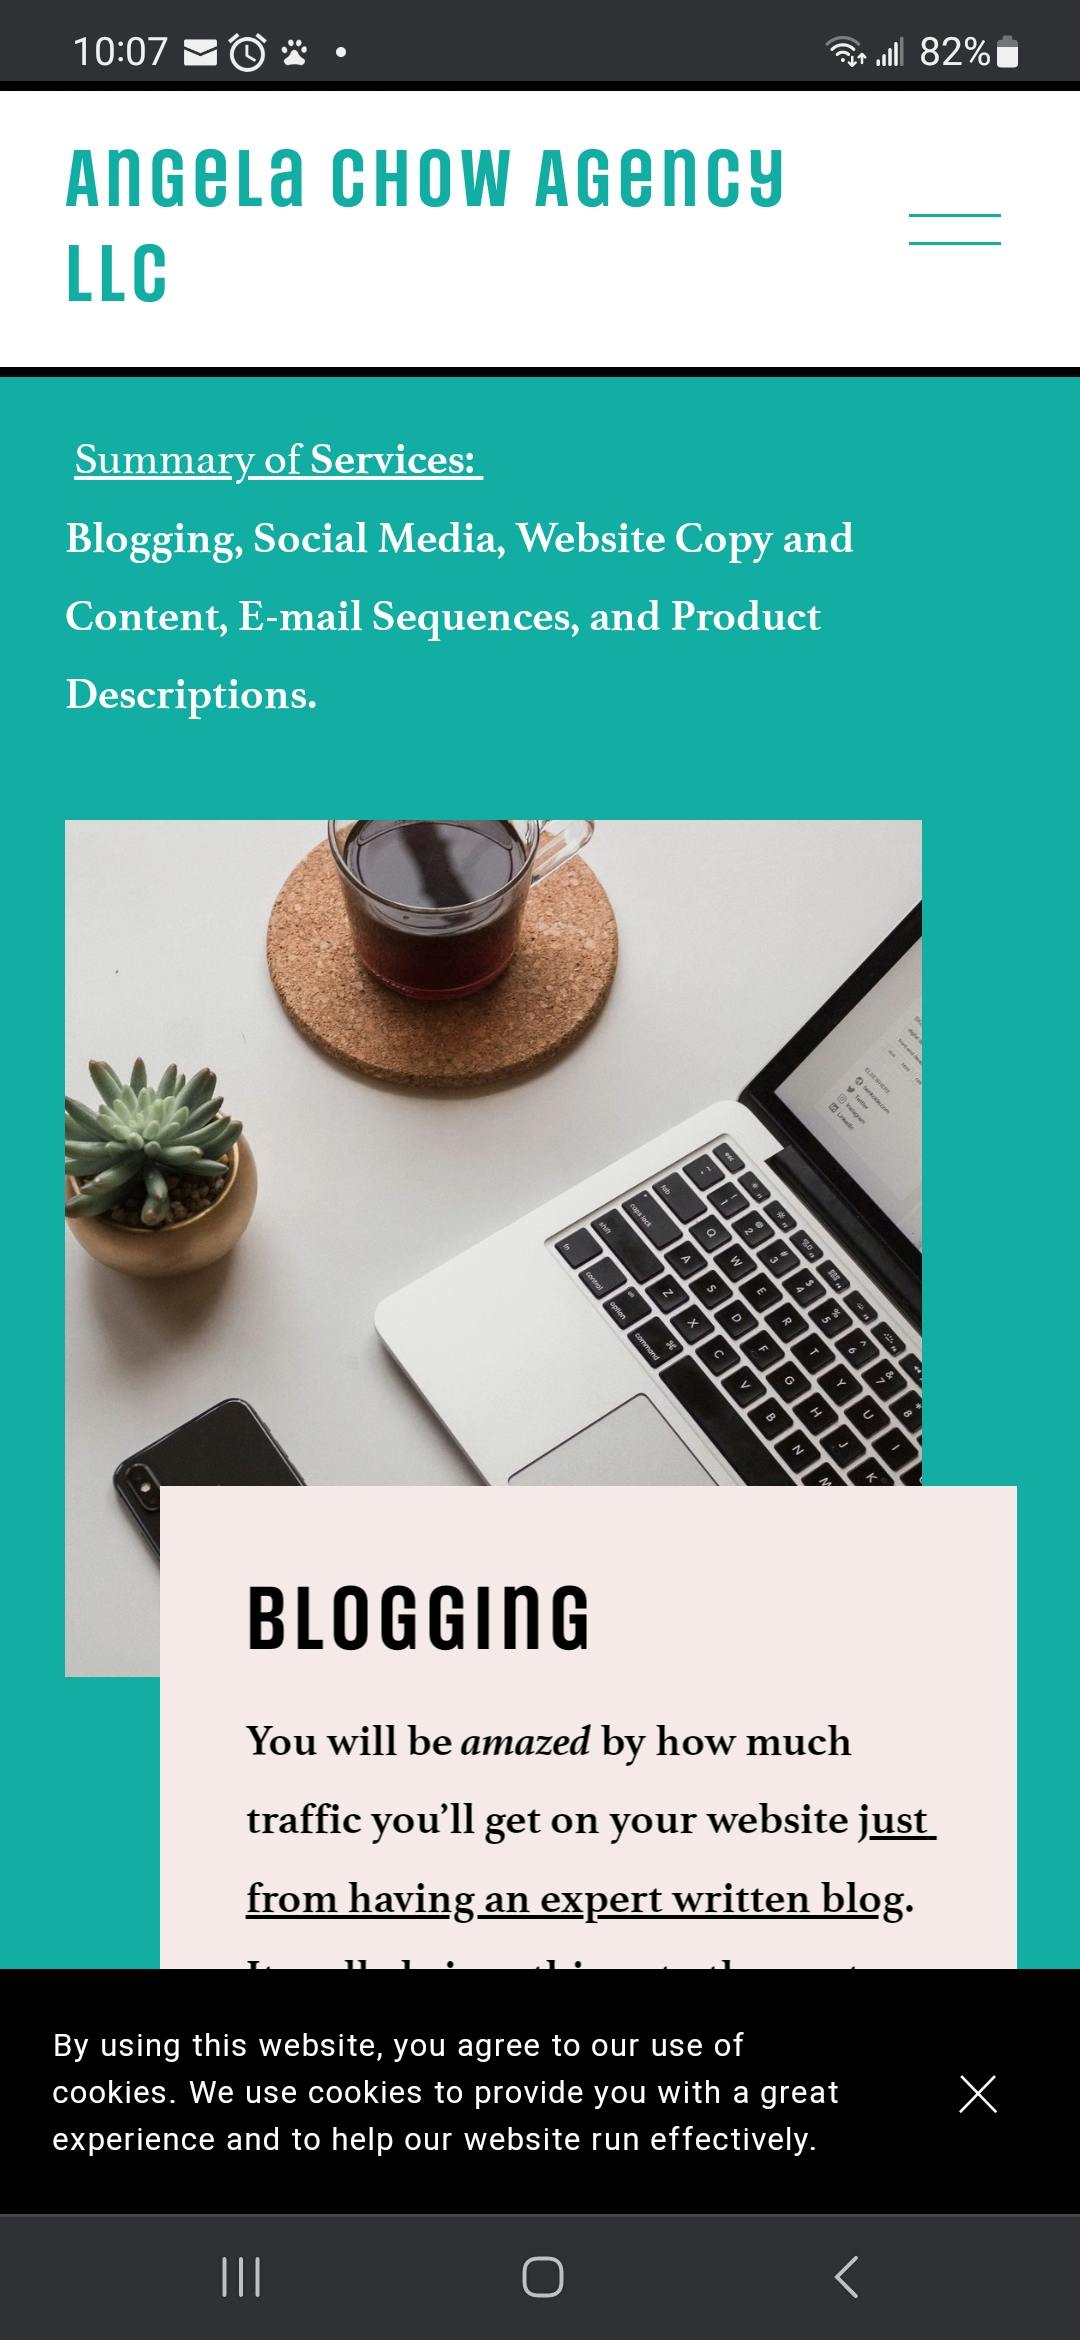 Content Marketing/Blogging